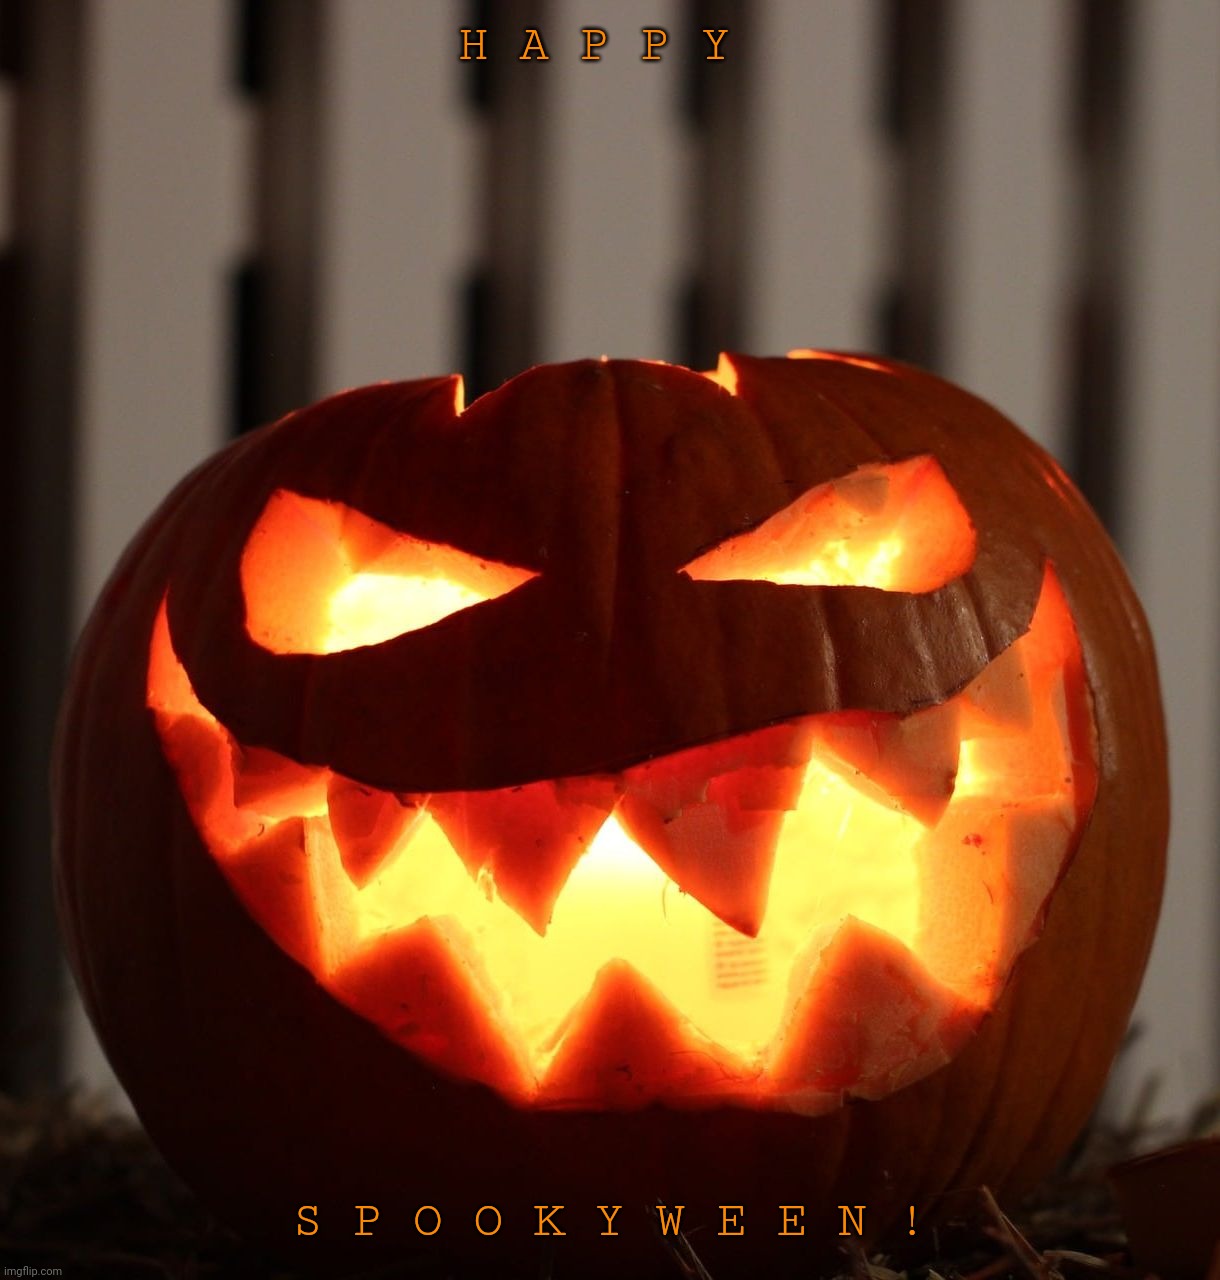 Boo! Time to spook! | H A P P Y; S P O O K Y W E E N ! | image tagged in jack o lantern,spookyween,halloween,spooky,spooky month,happy halloween | made w/ Imgflip meme maker